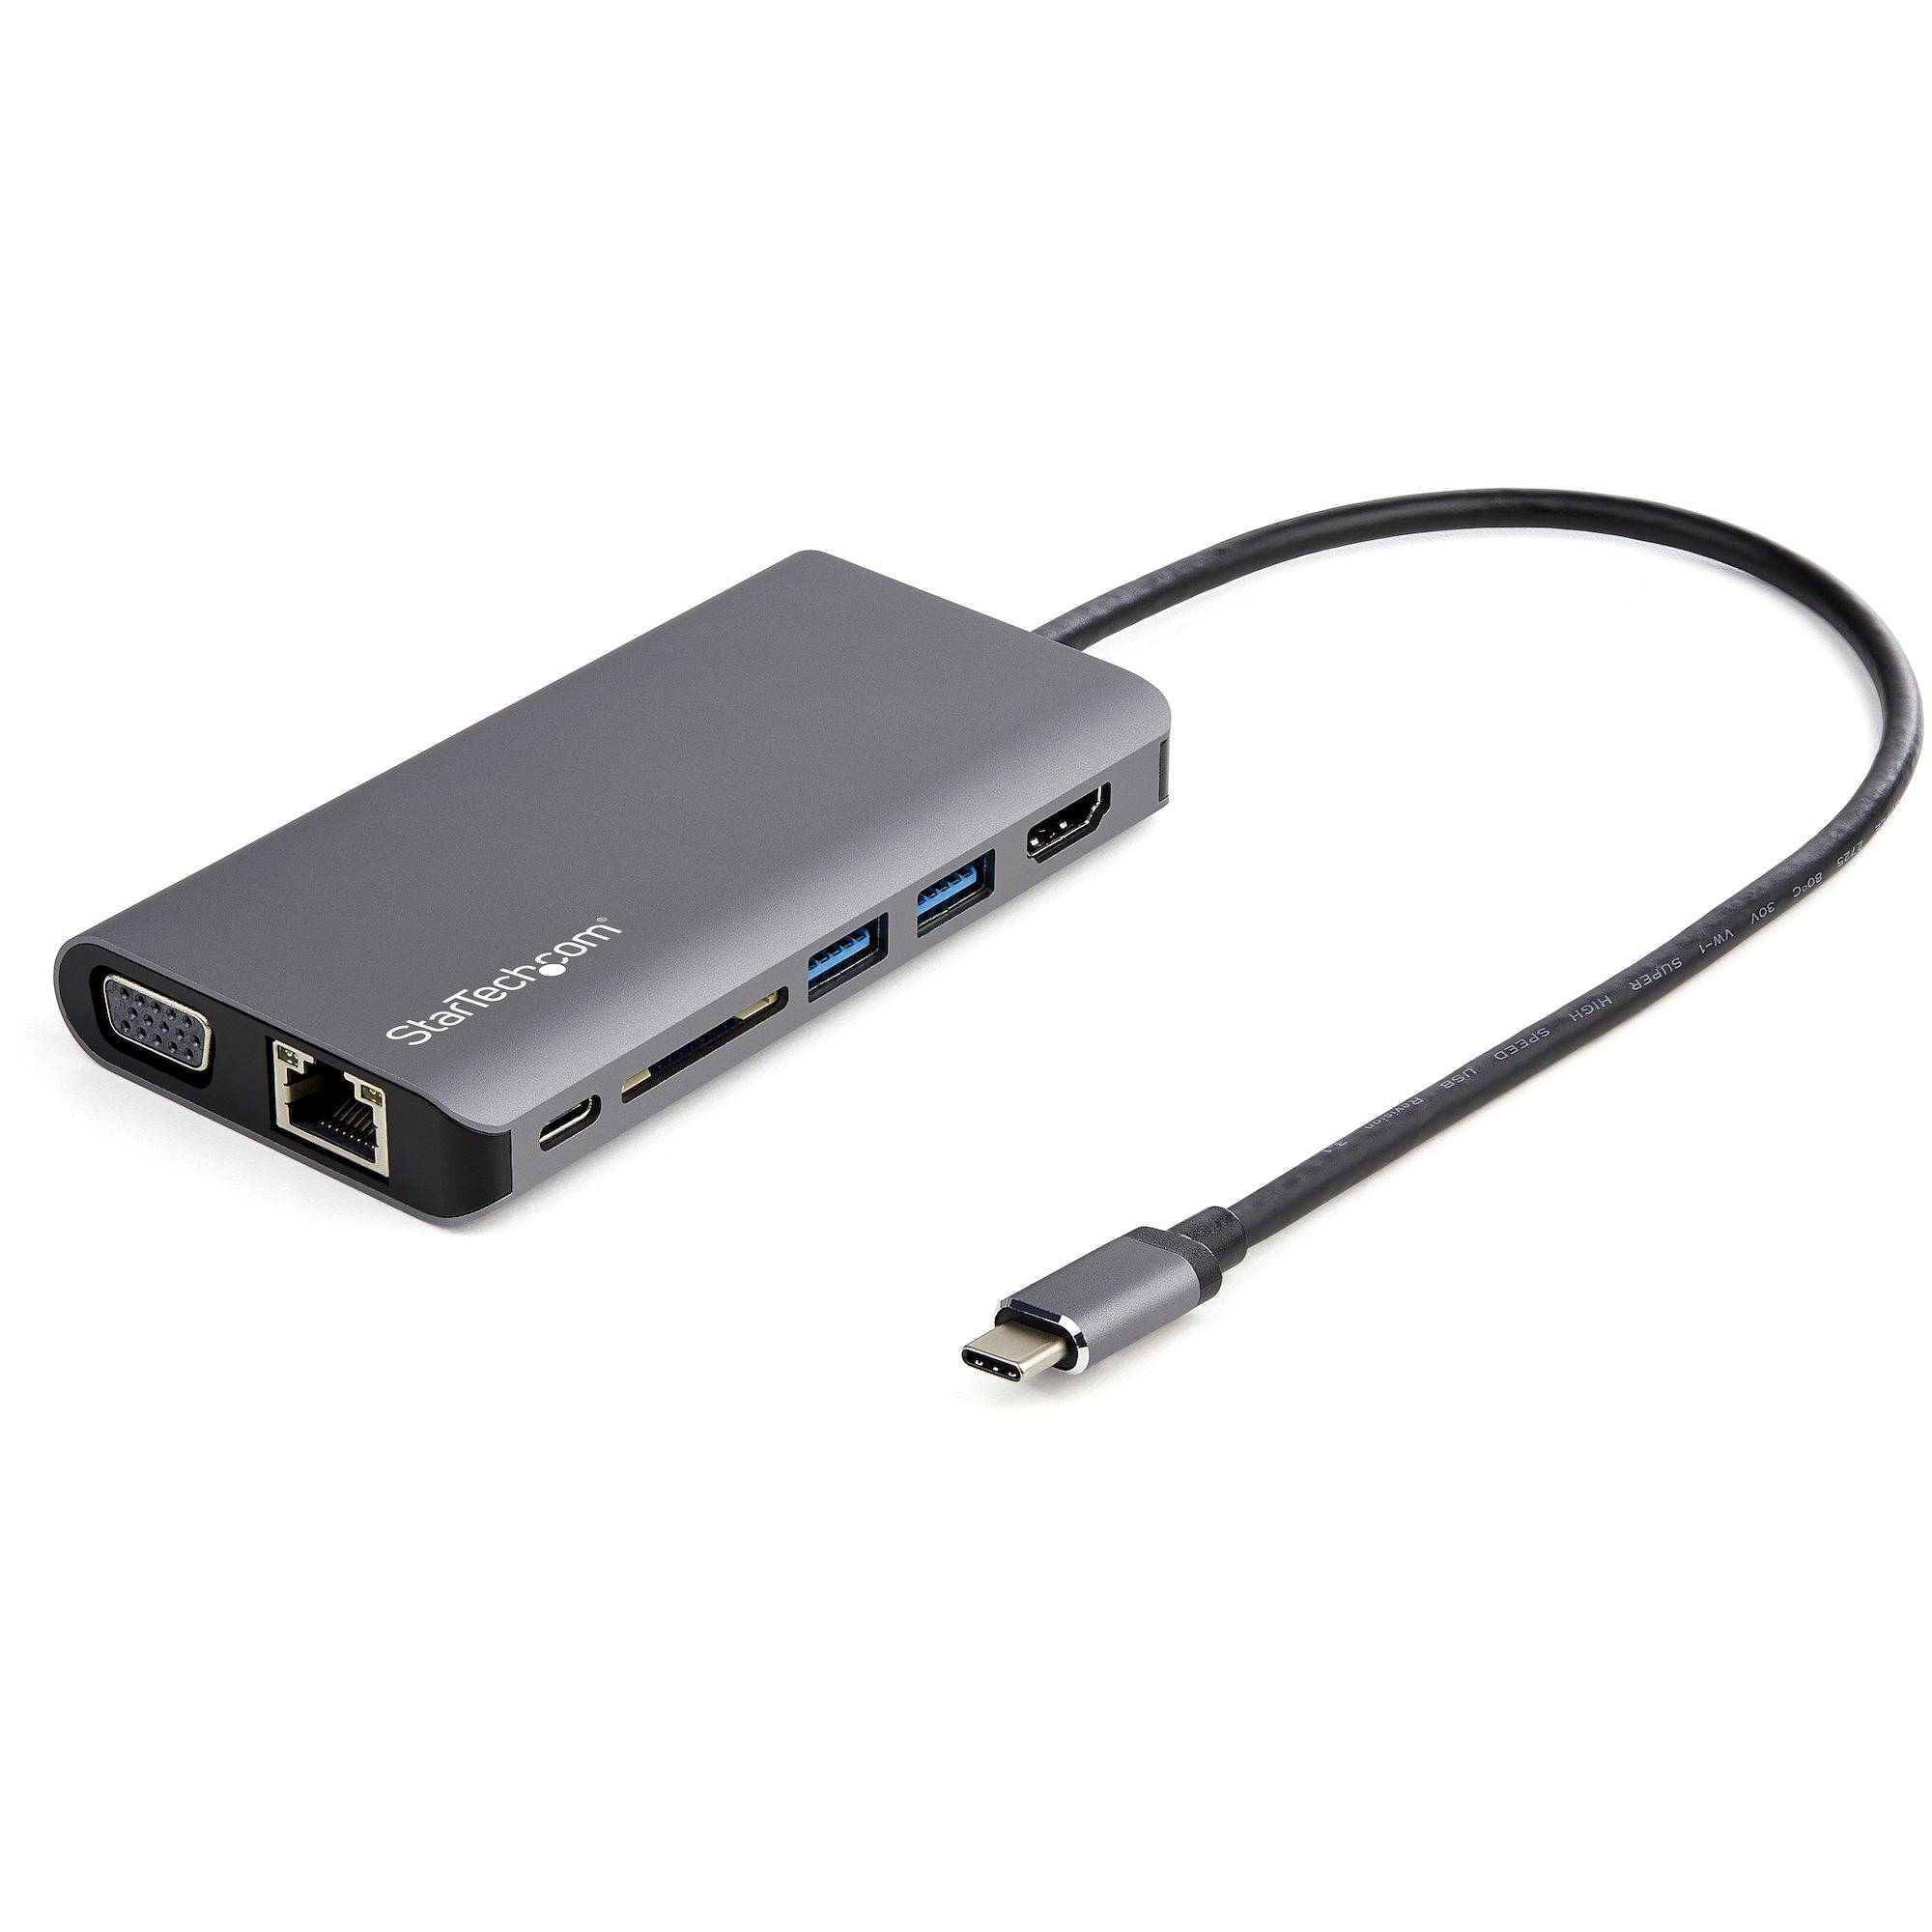 Rca Informatique - Image du produit : USB-C MULTIPORT ADAPTER 100W PD HDMI/VGA - SD READER-30CM CABLE